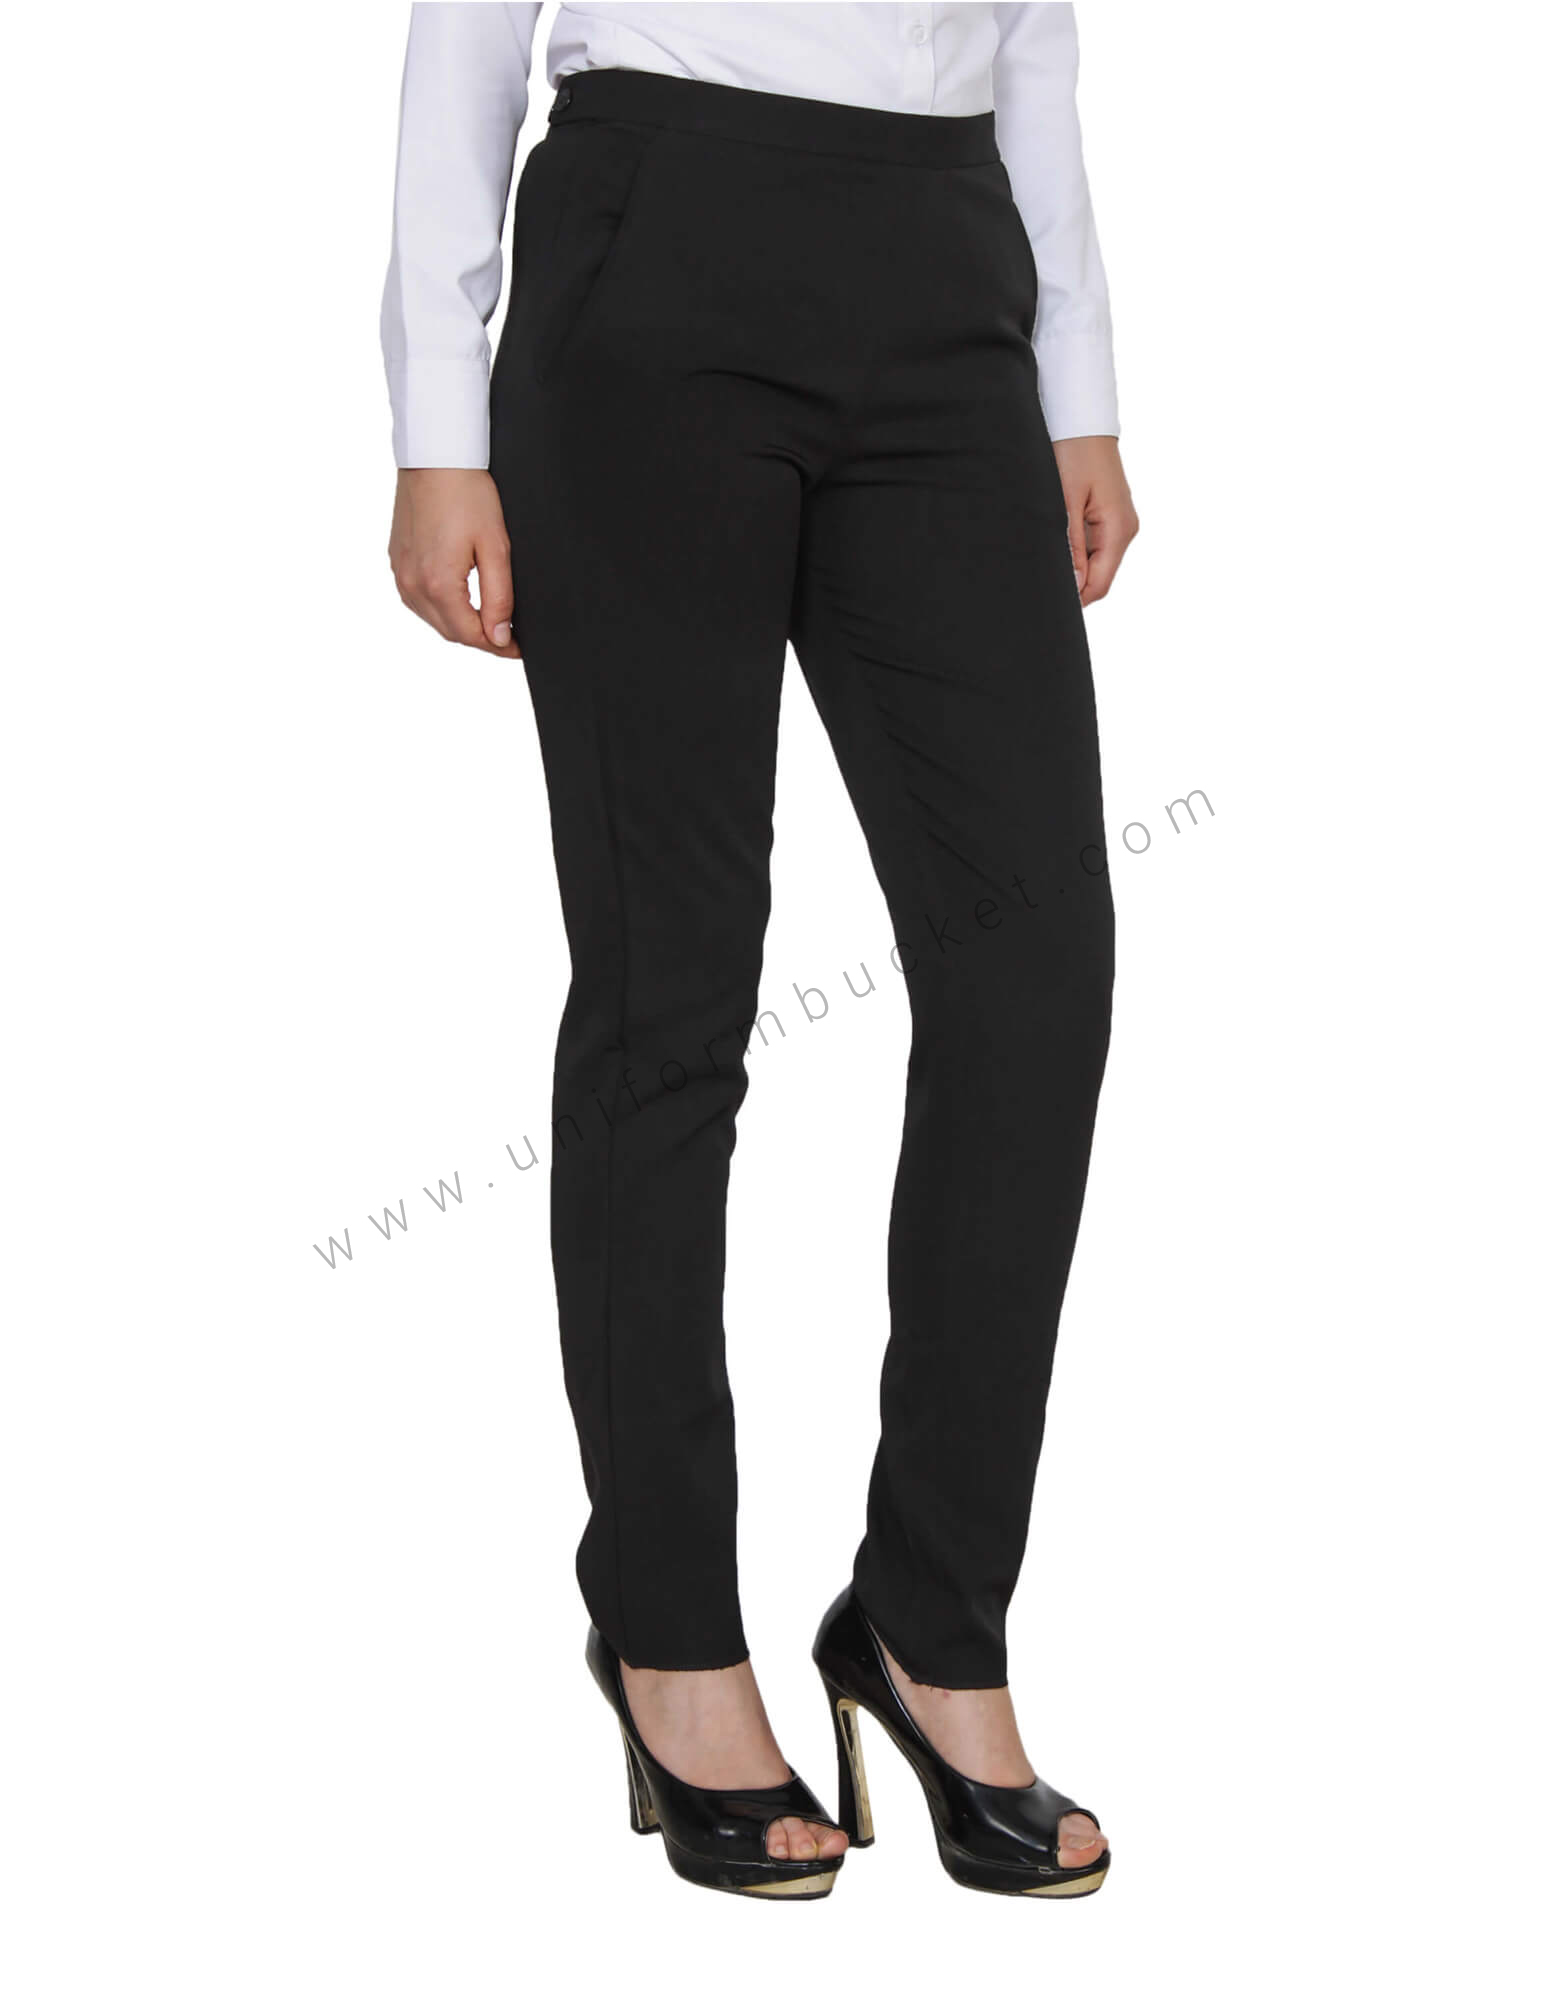 https://www.uniformbucket.com/img/product/original/black-uniform-trouser-with-adjuster-for-women_68782.jpg